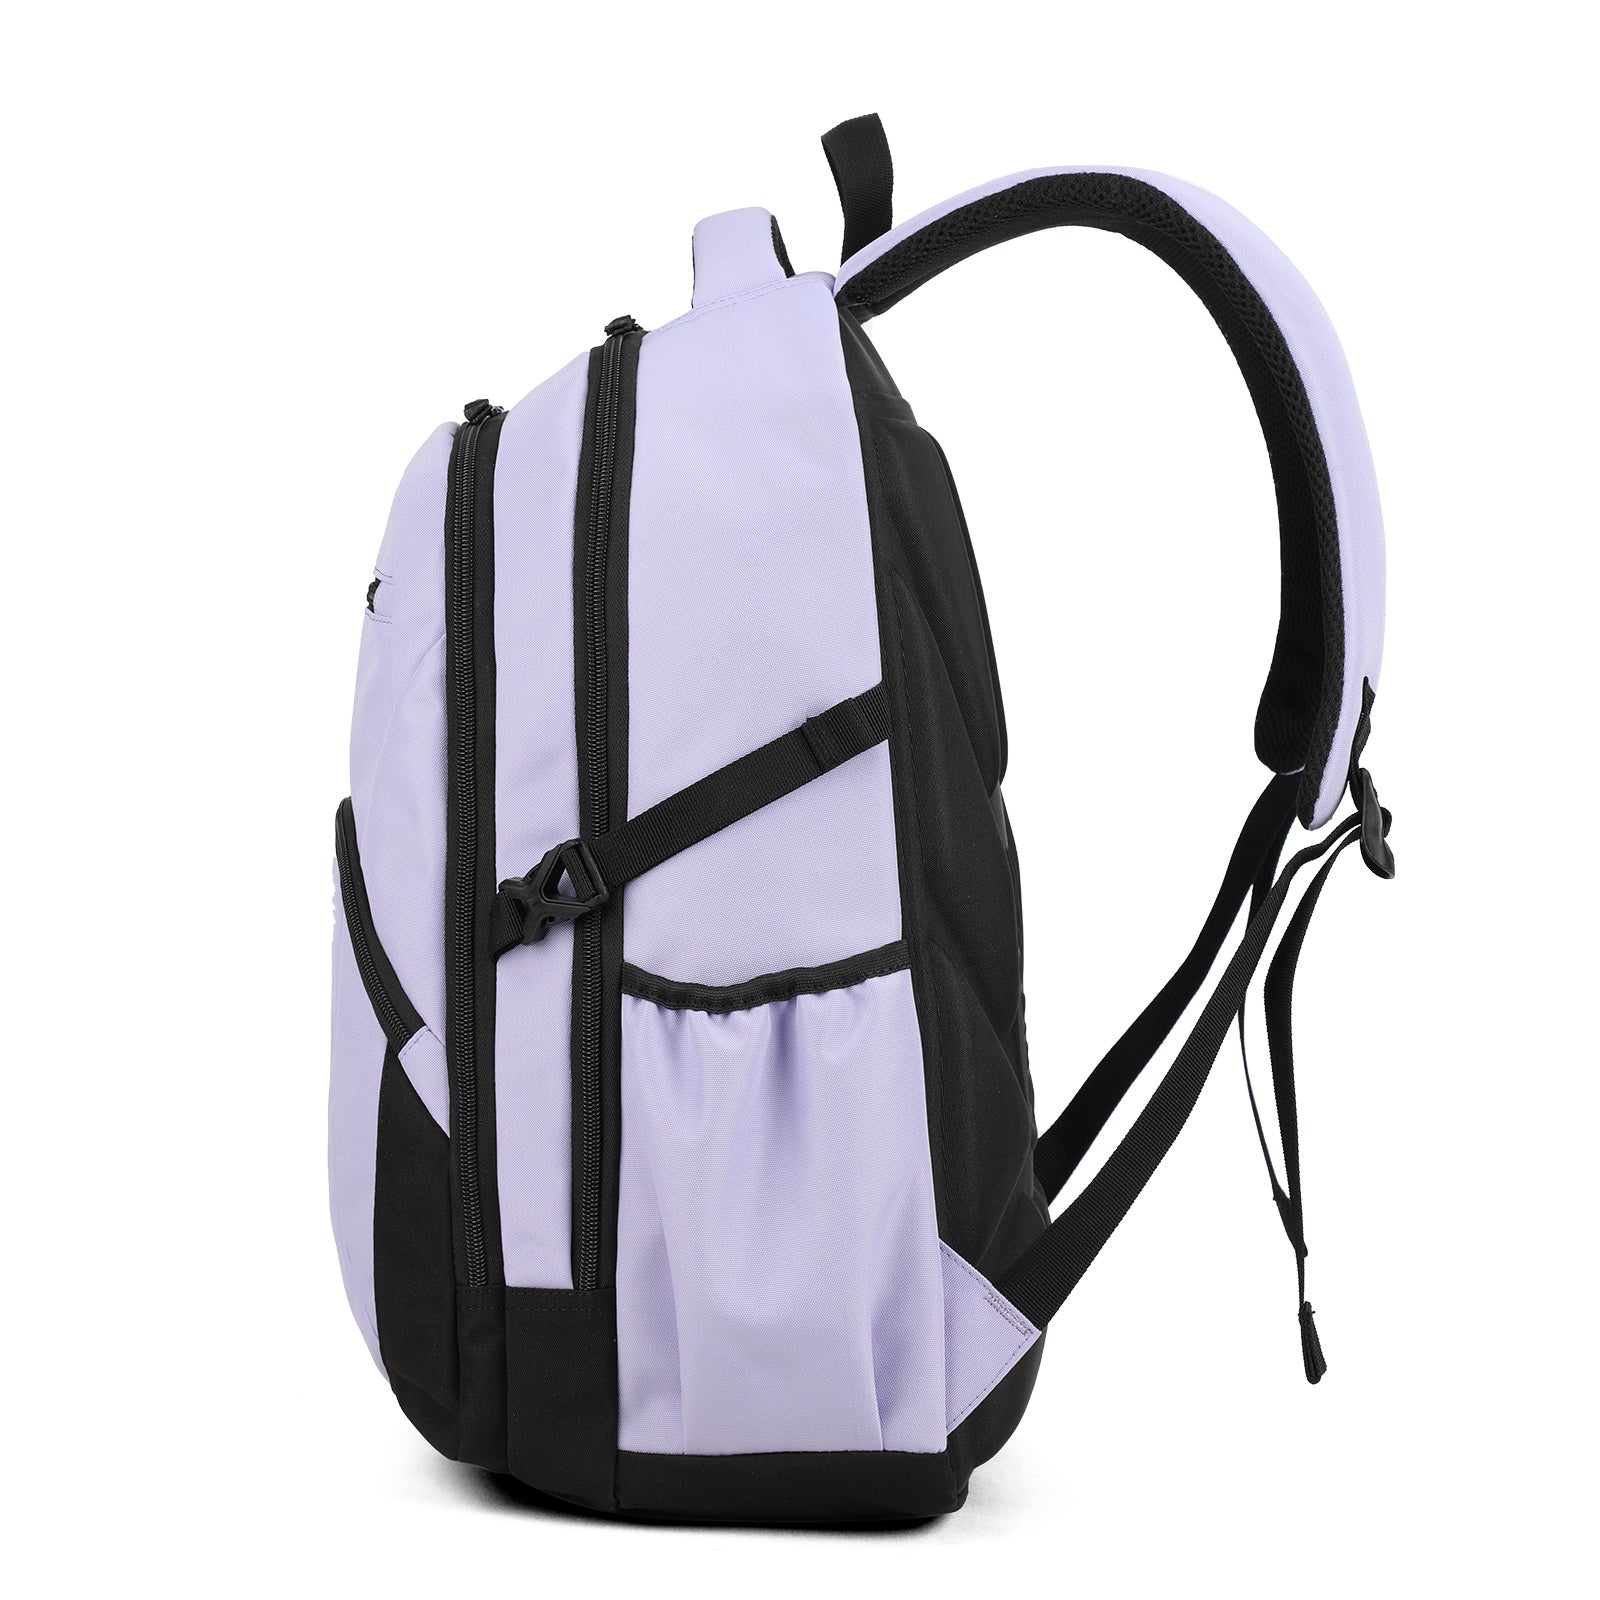 Aoking Travel Backpack SN2678 Purple